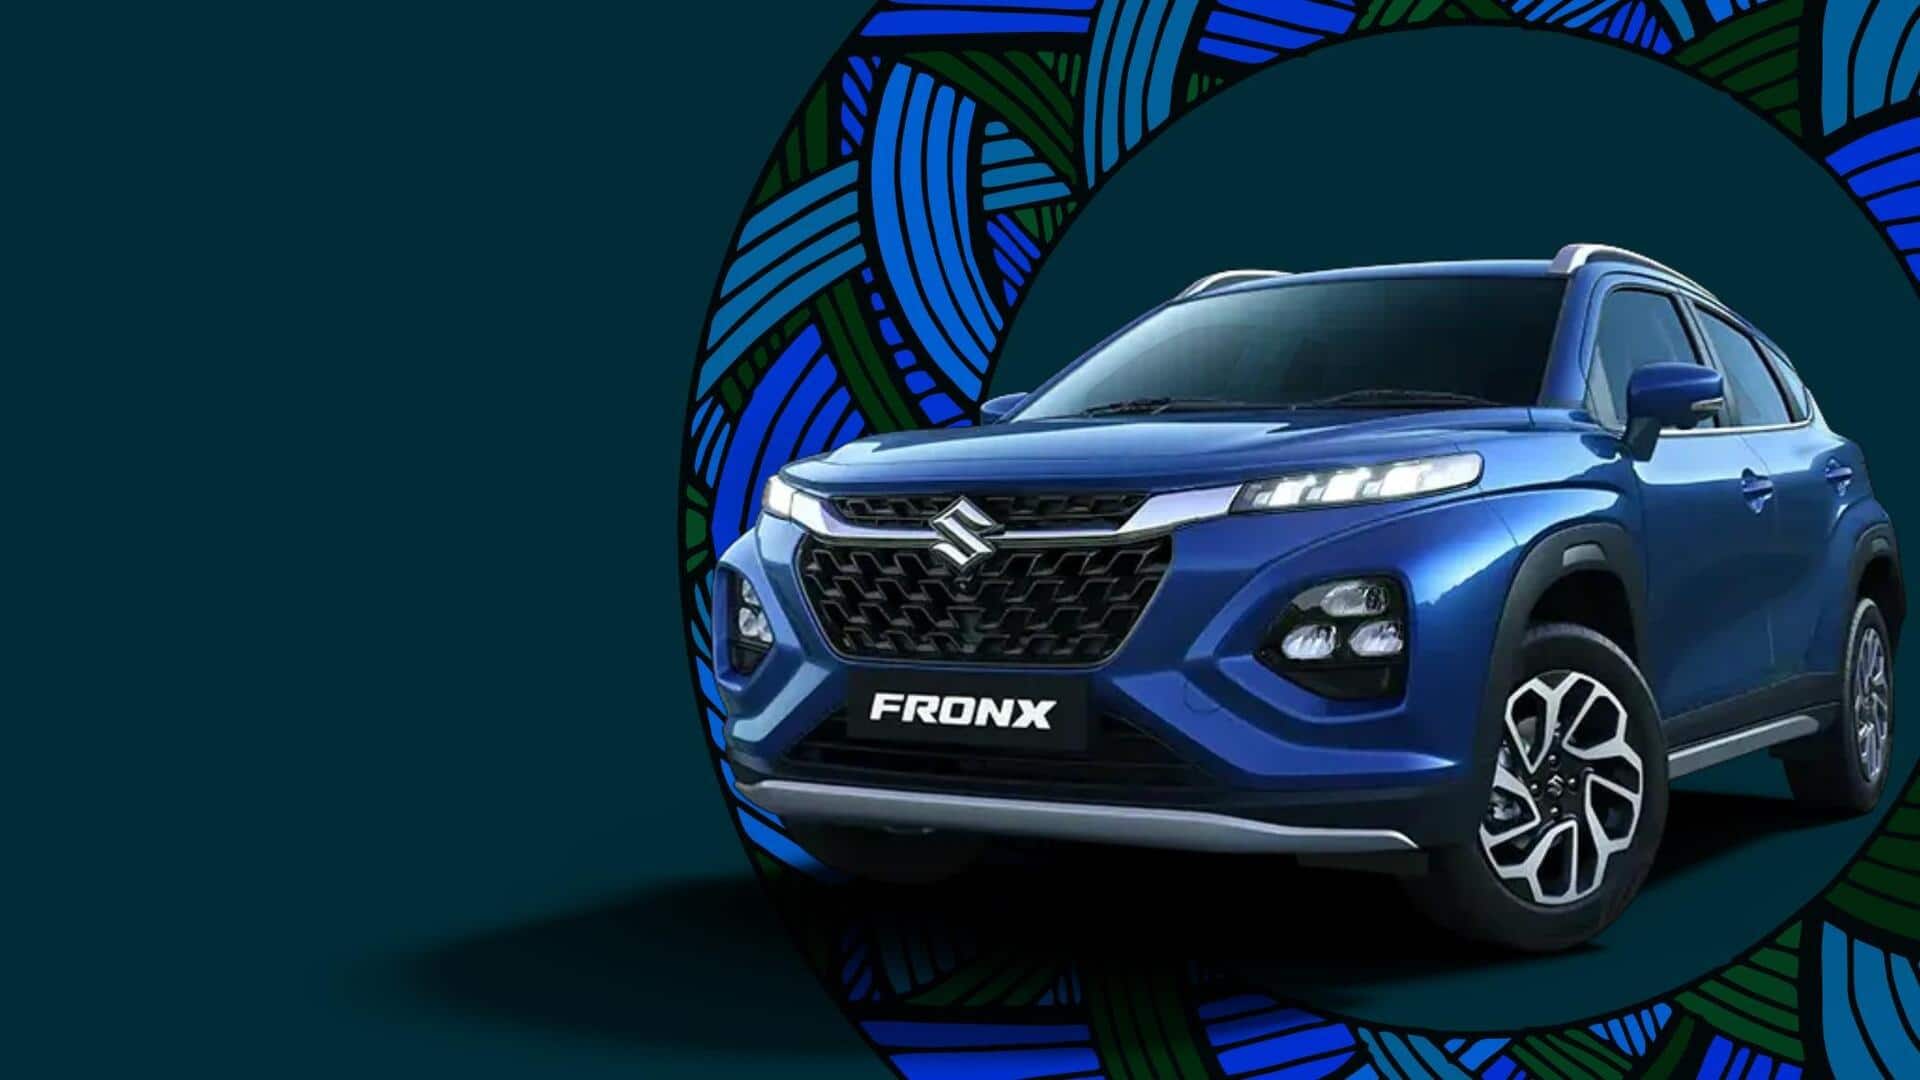 Maruti Suzuki may launch affordable Fronx model with turbo engine